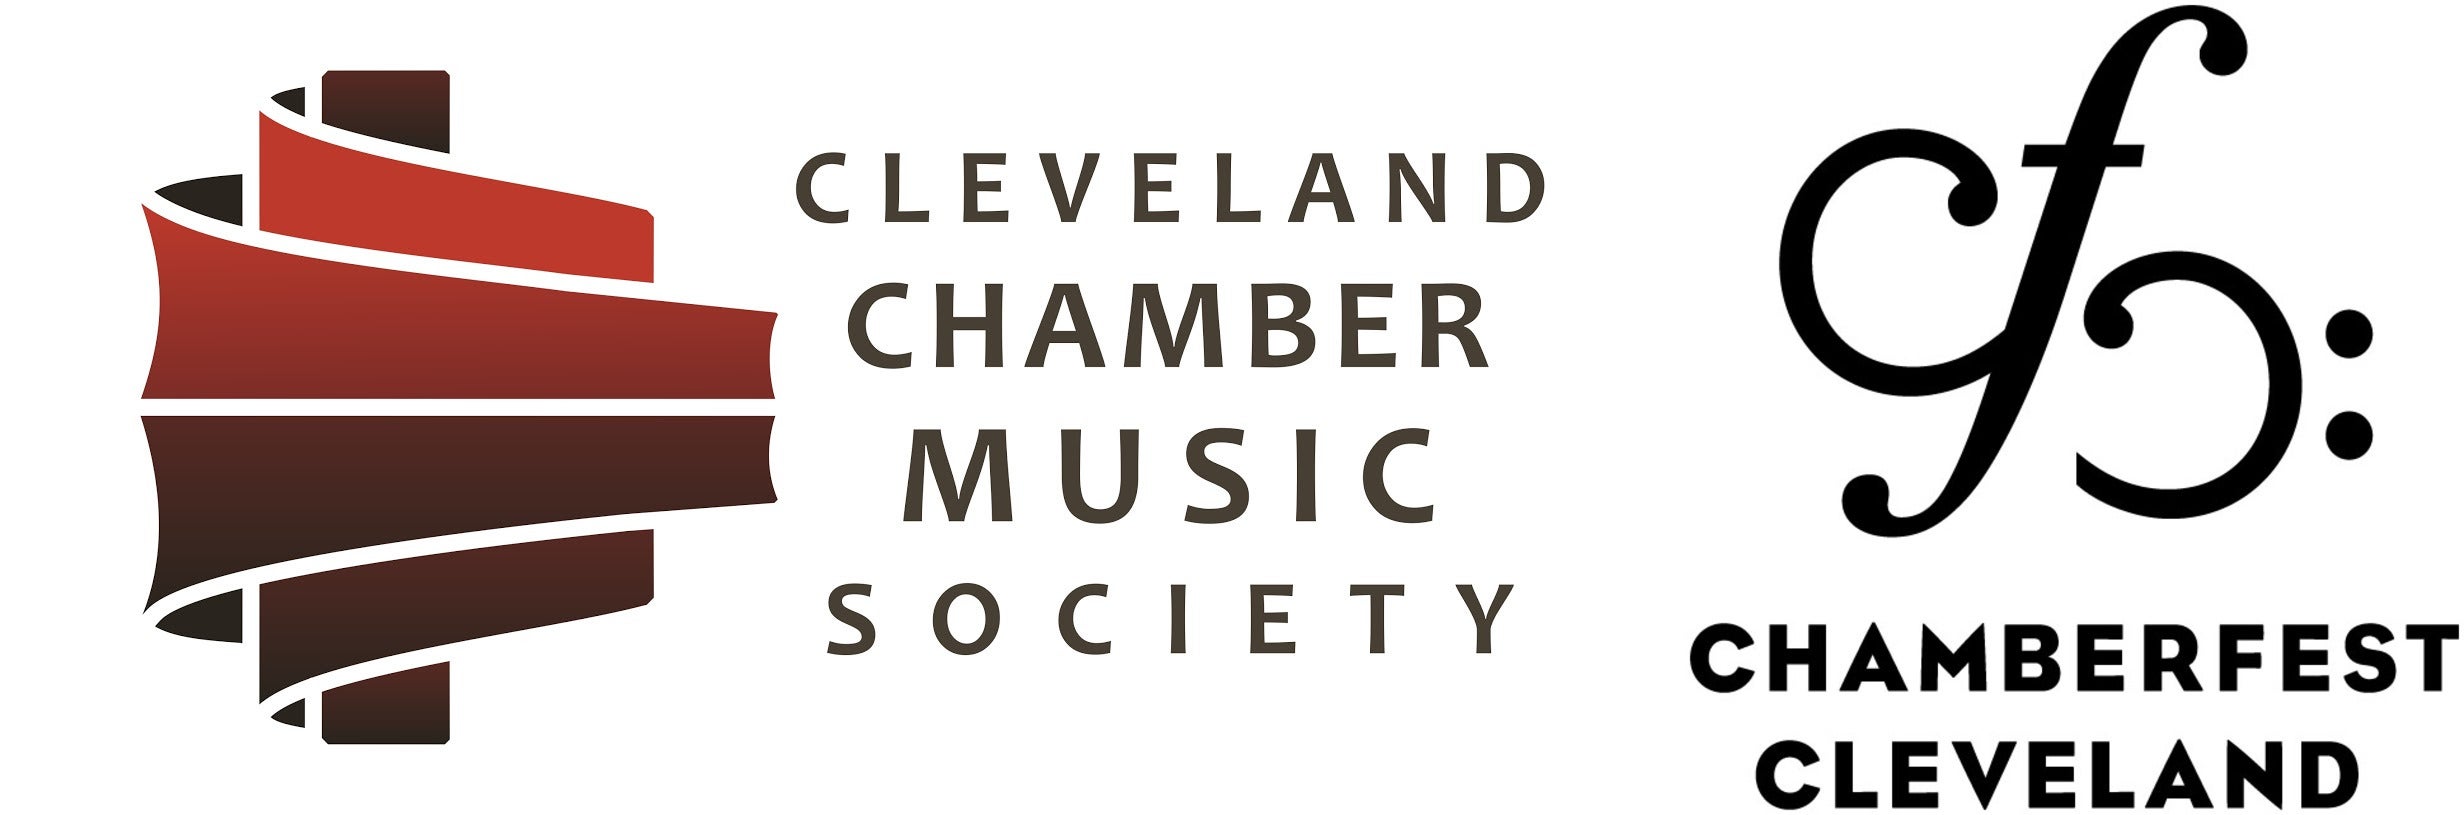 Cleveland Chamber Music Society and ChamberFest Cleveland